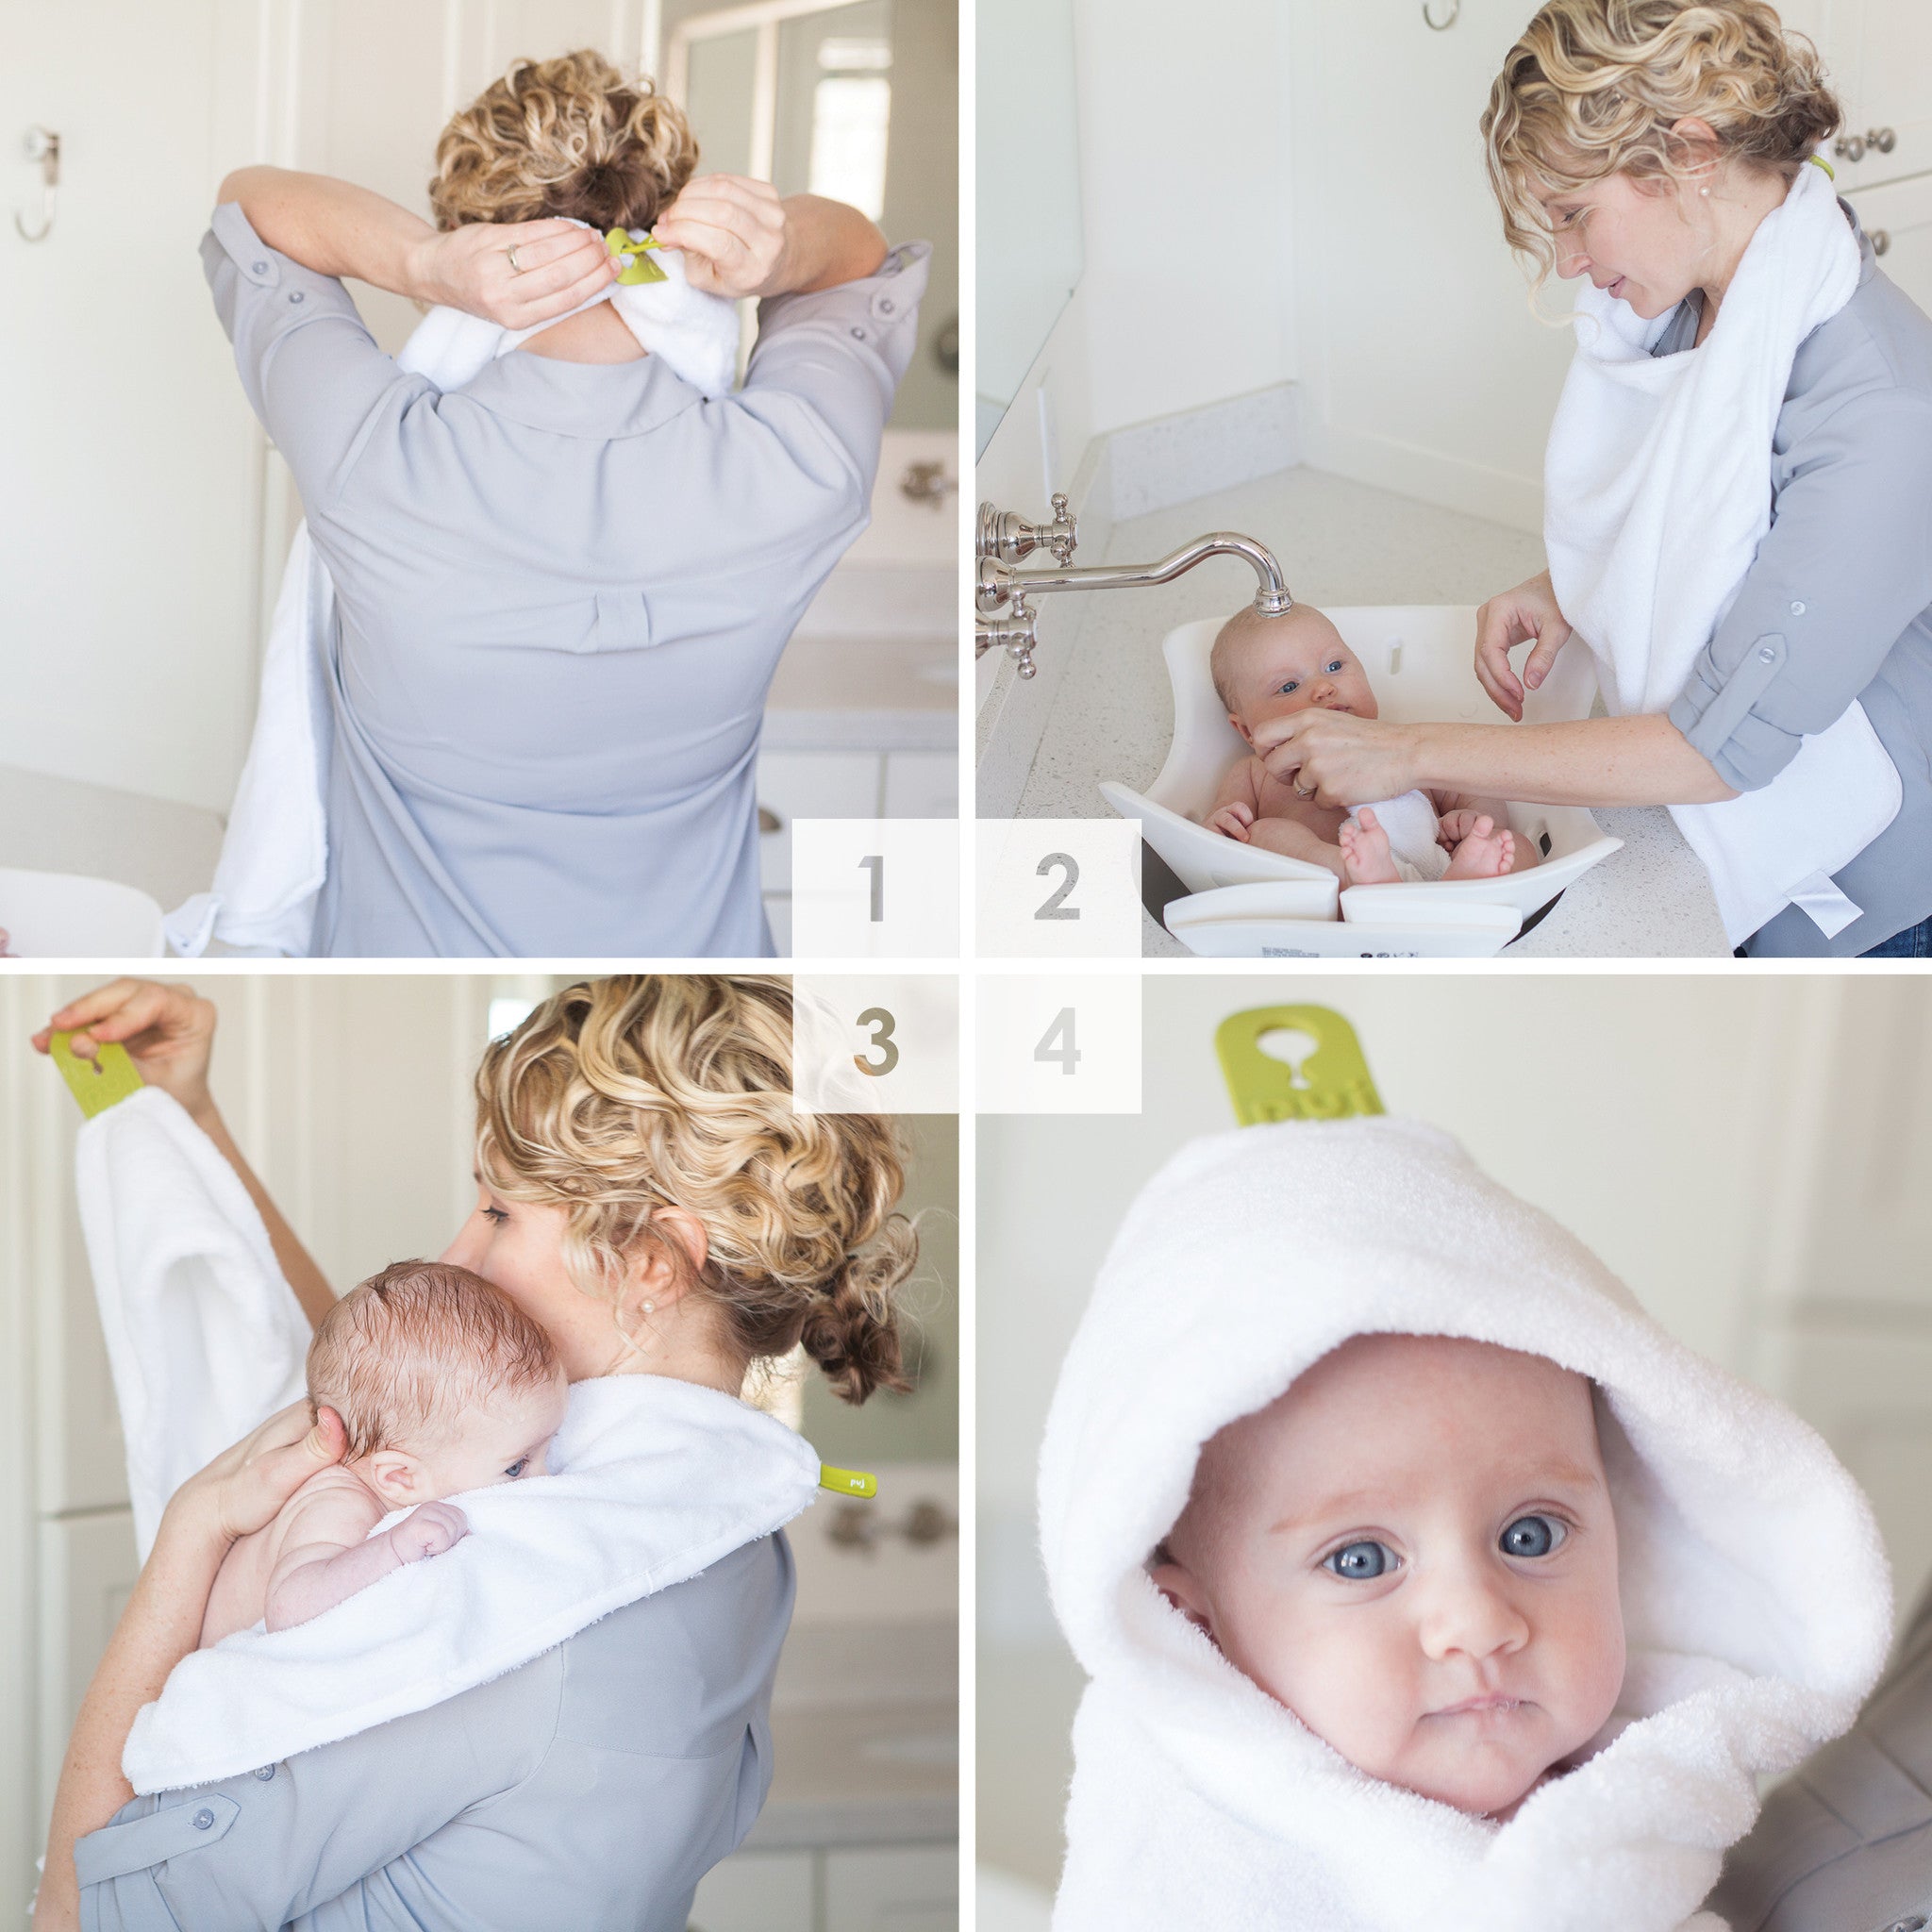 Hug White Baby Towel